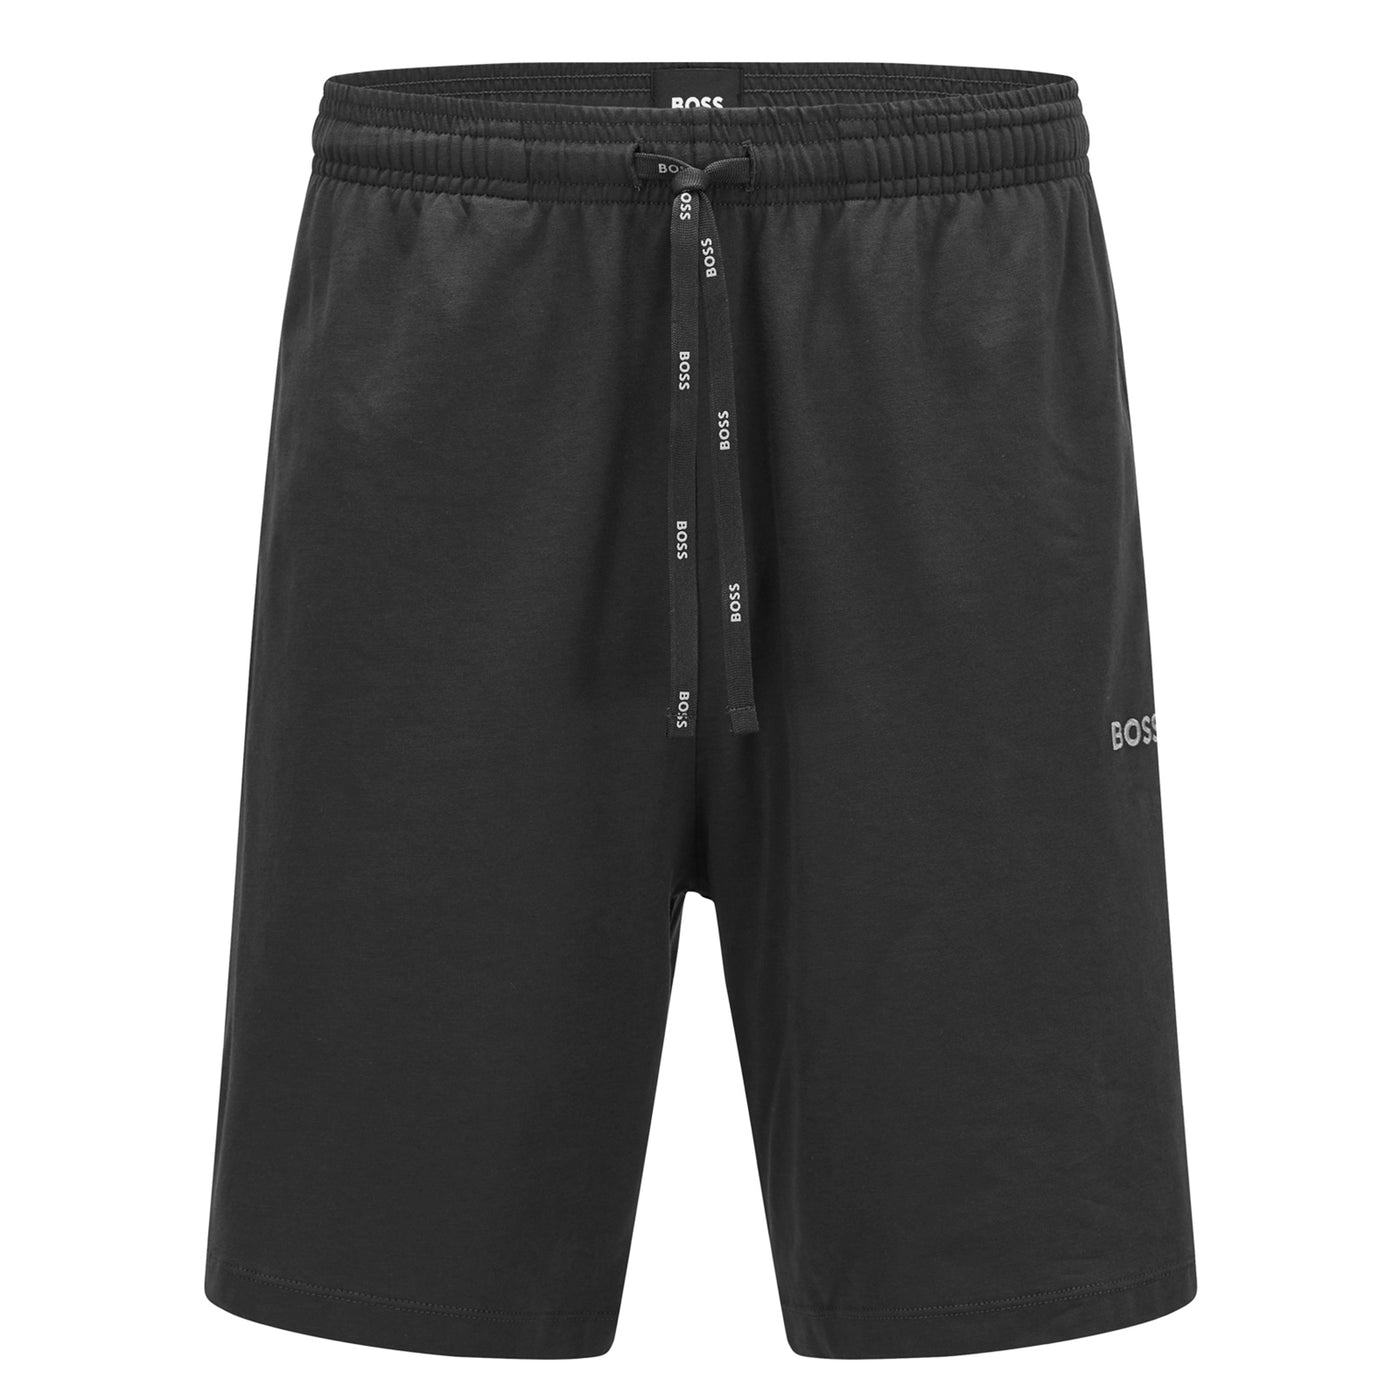 BOSS Herren Shorts Mix & Match mit Logo, Black